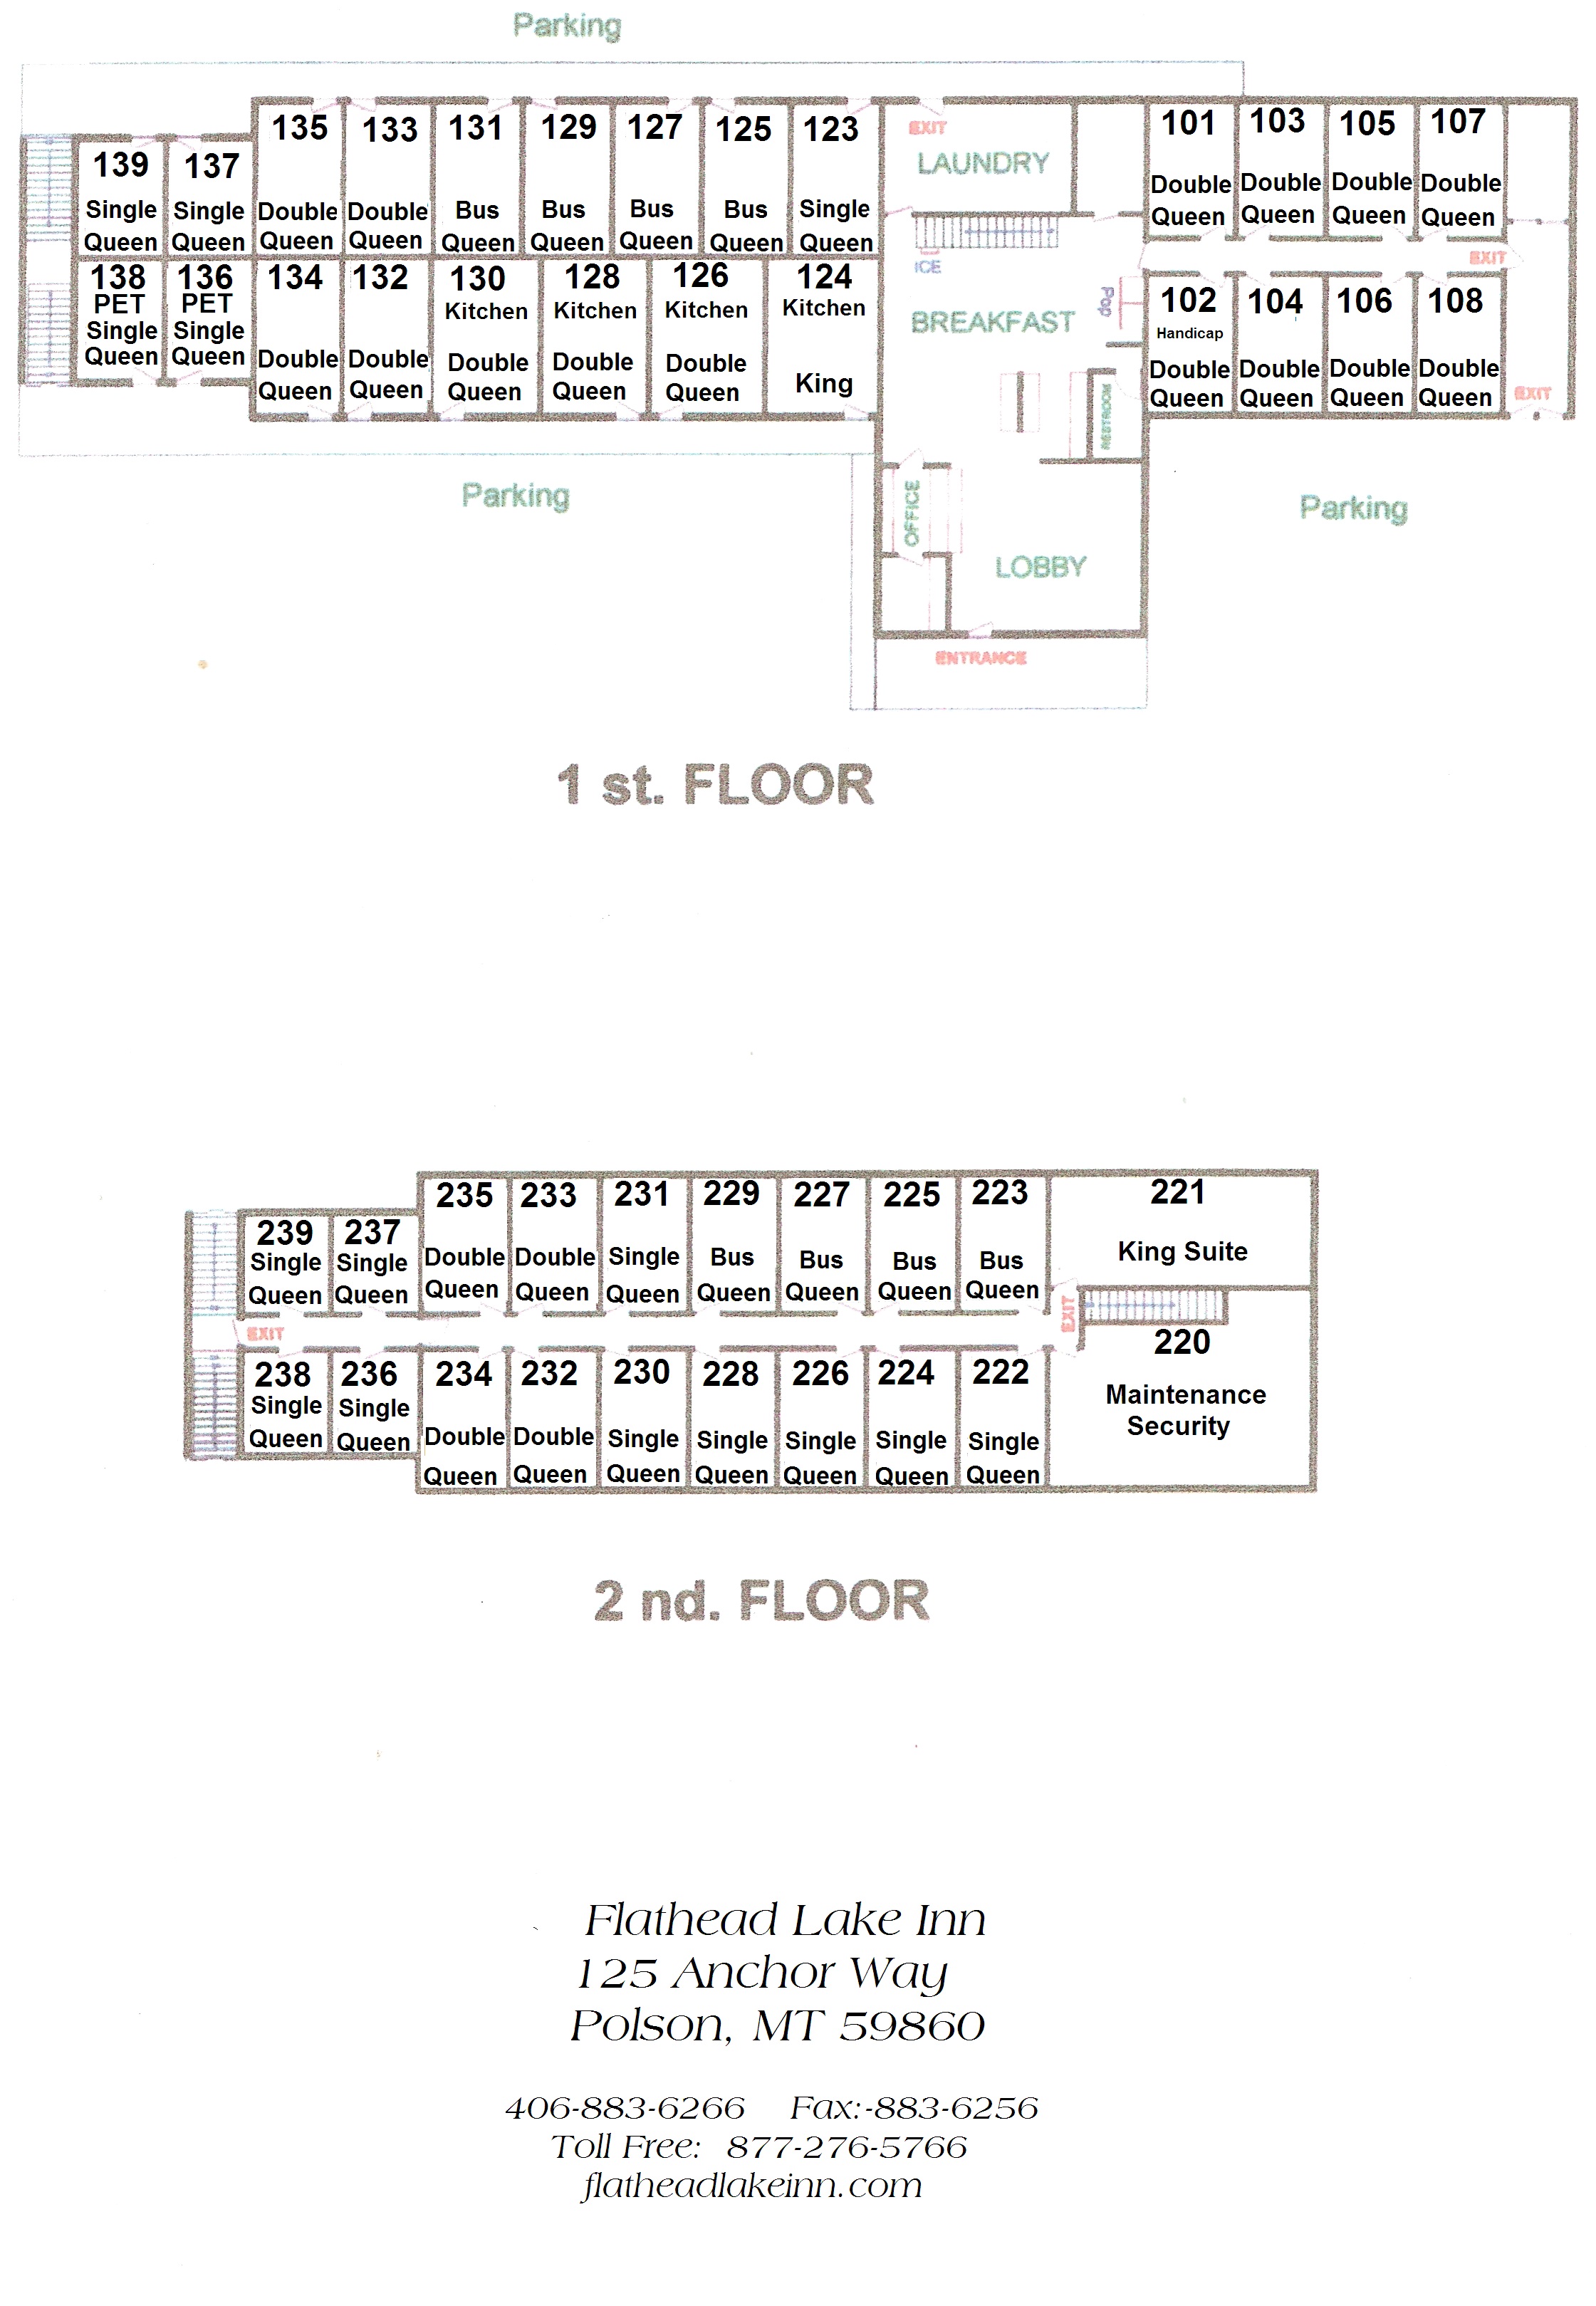 Facility Map Flathead Lake Inn